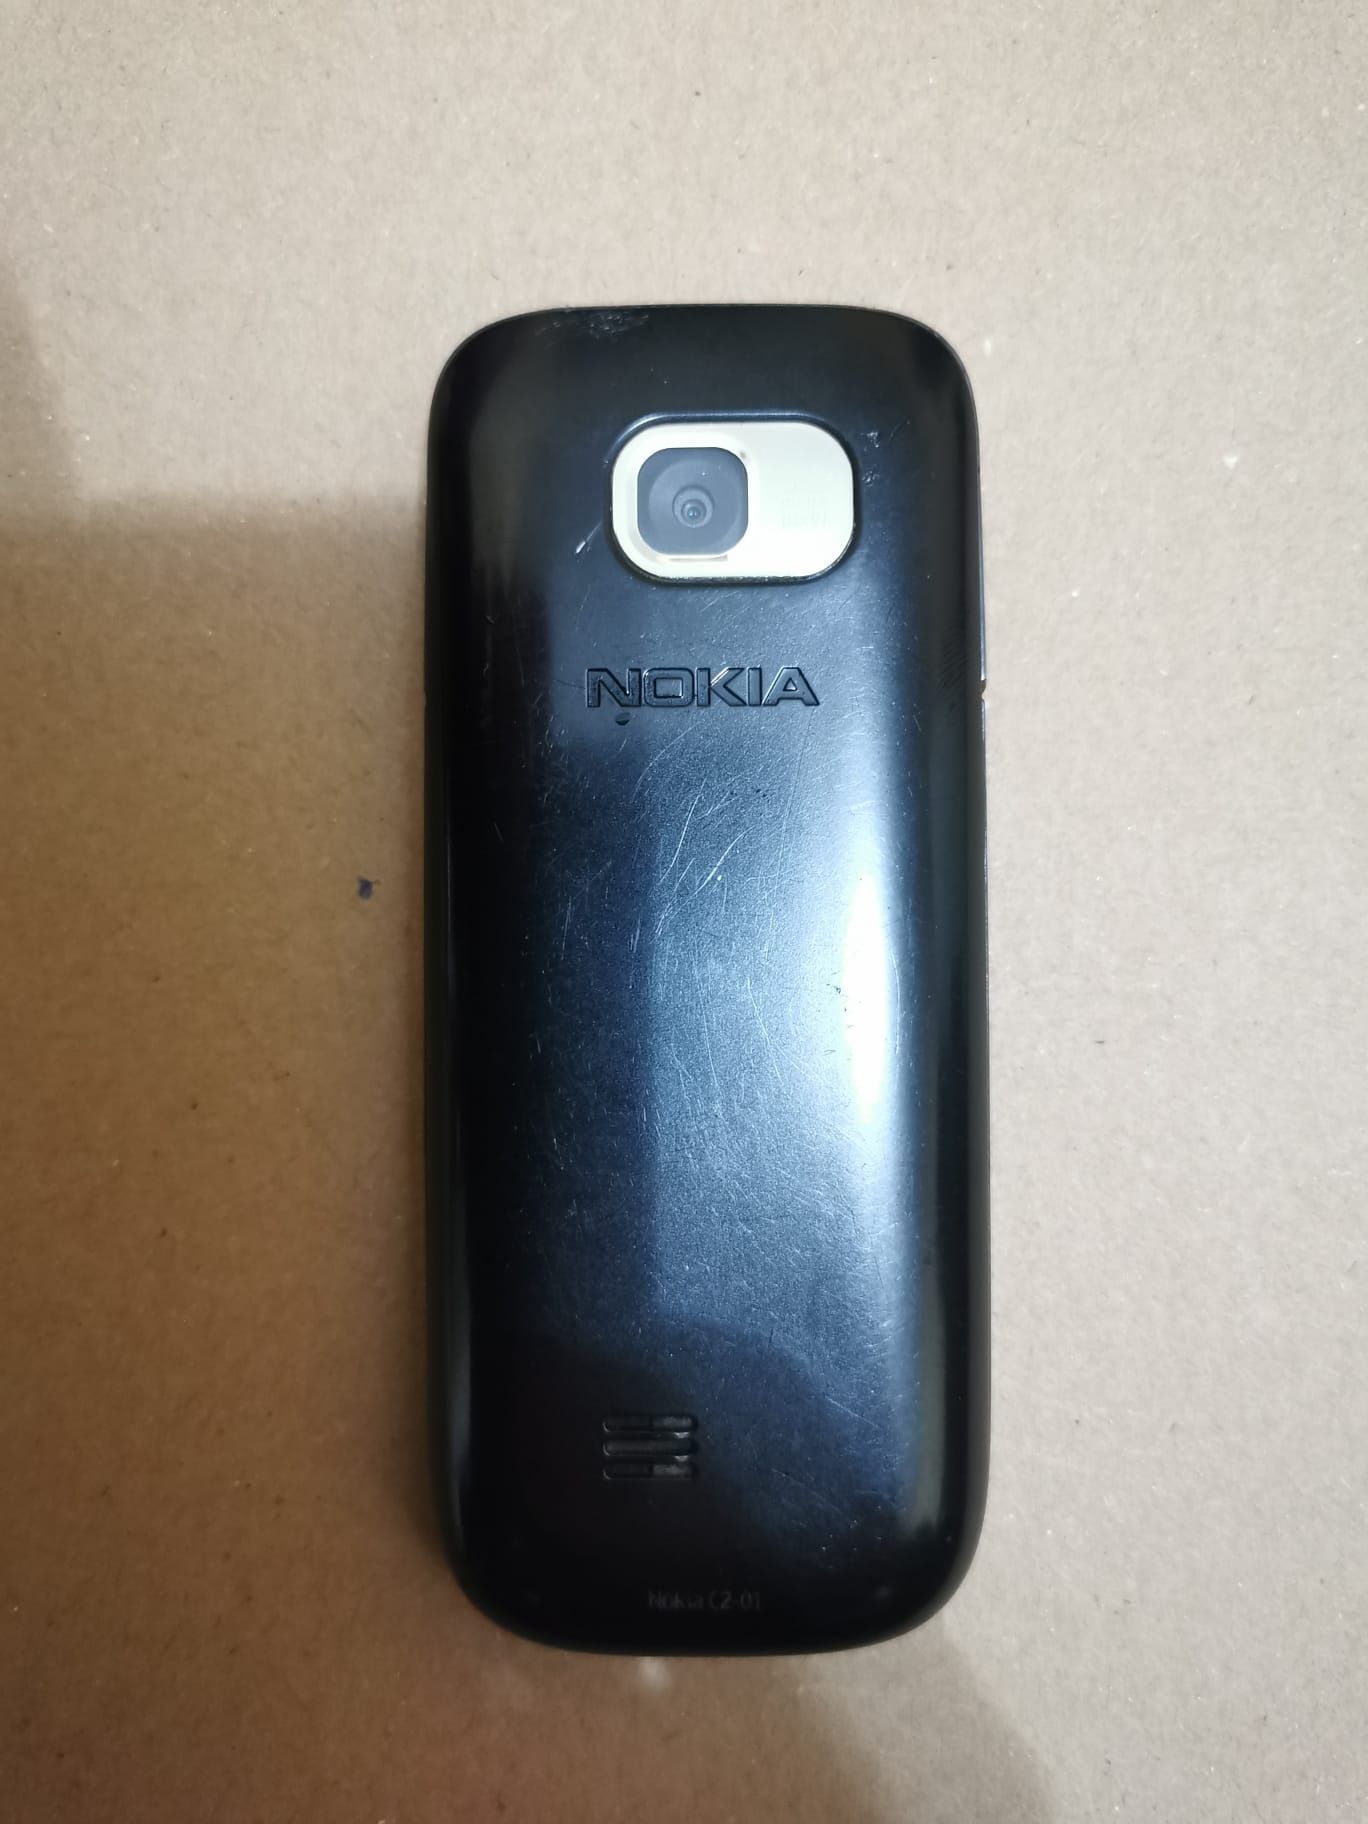 Telefonul Nokia C2-01